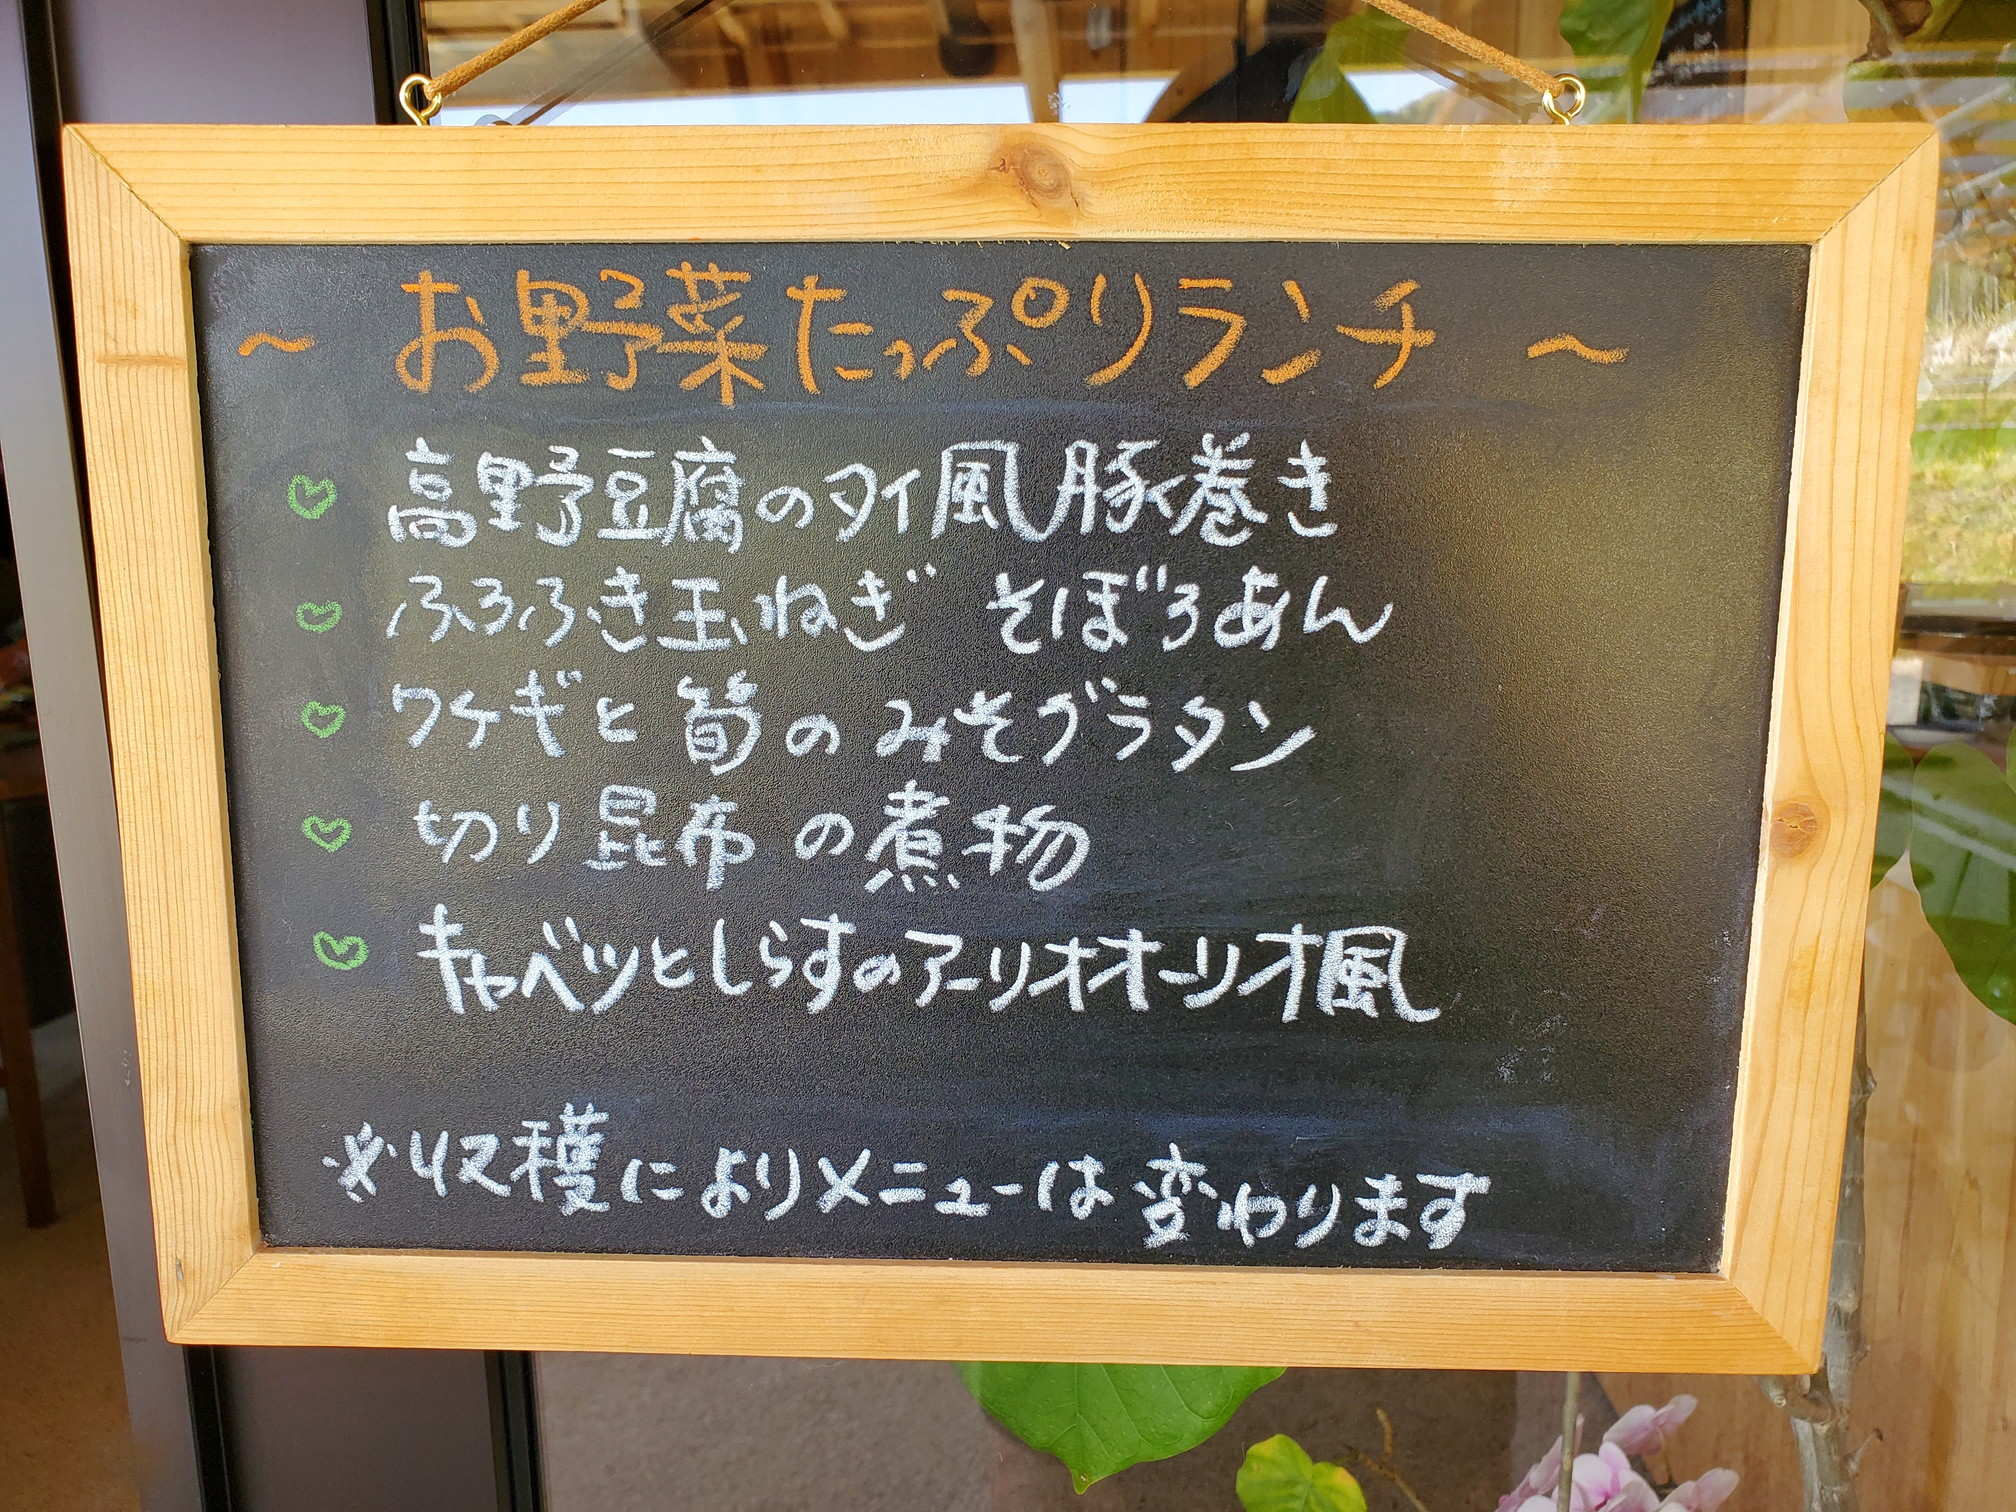 Cafe samanala garden(カフェ サマナラガーデン)